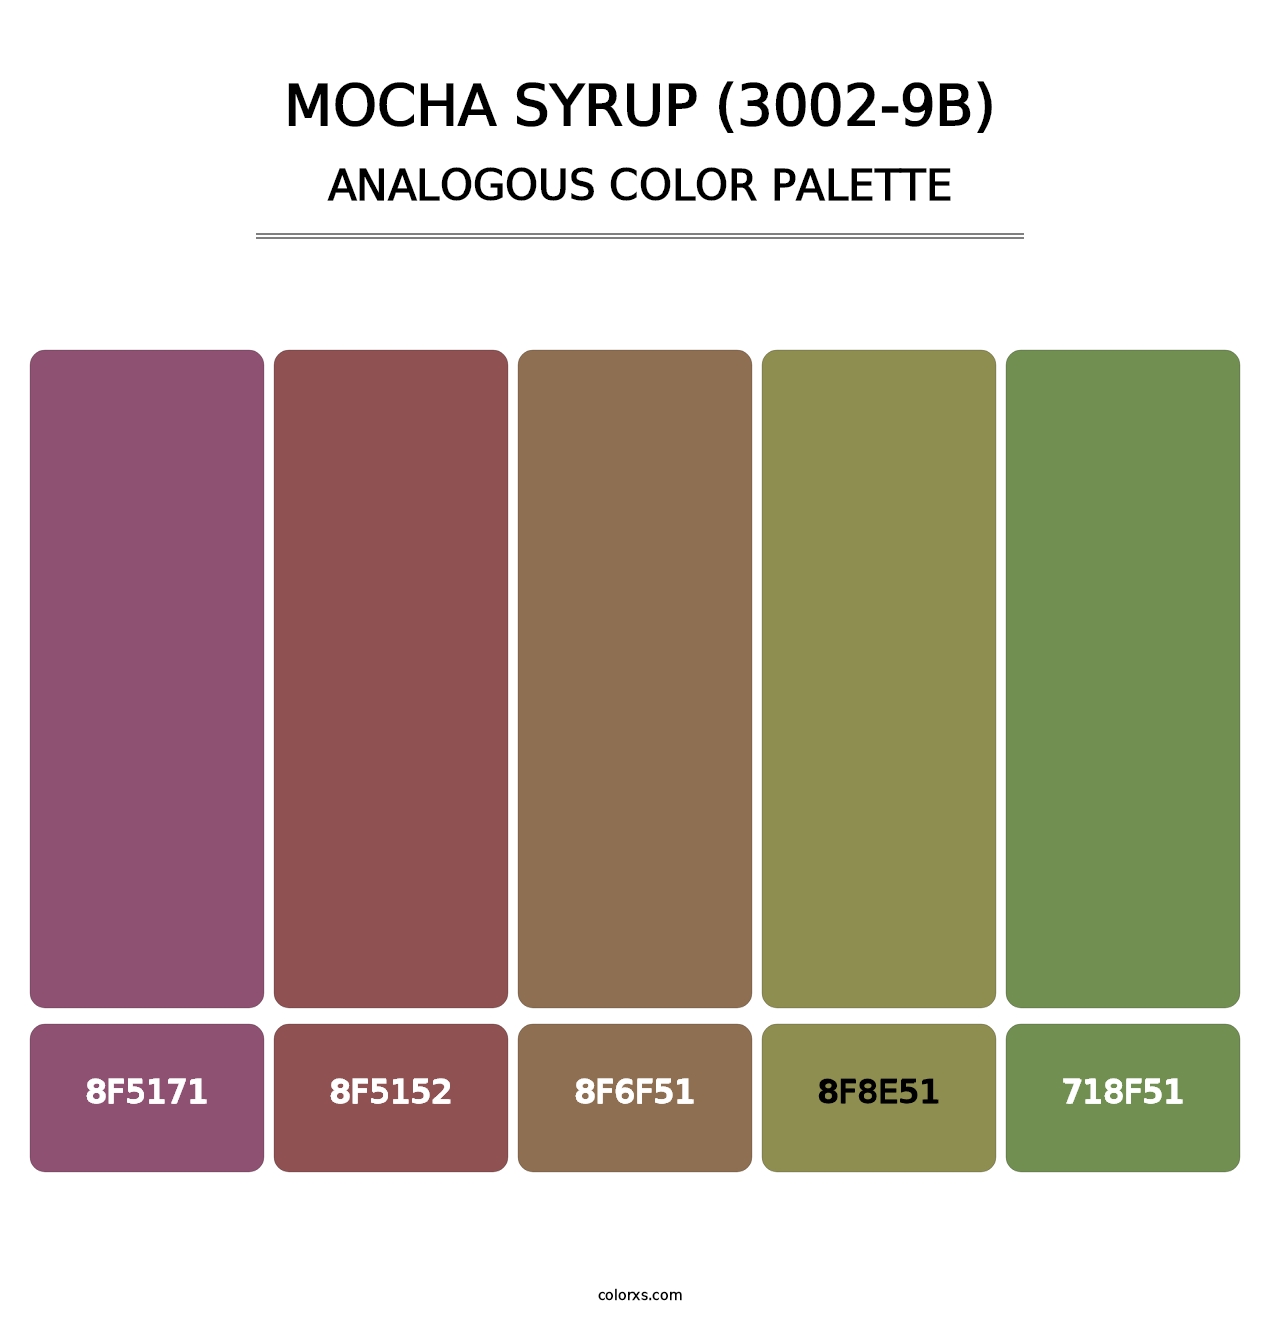 Mocha Syrup (3002-9B) - Analogous Color Palette